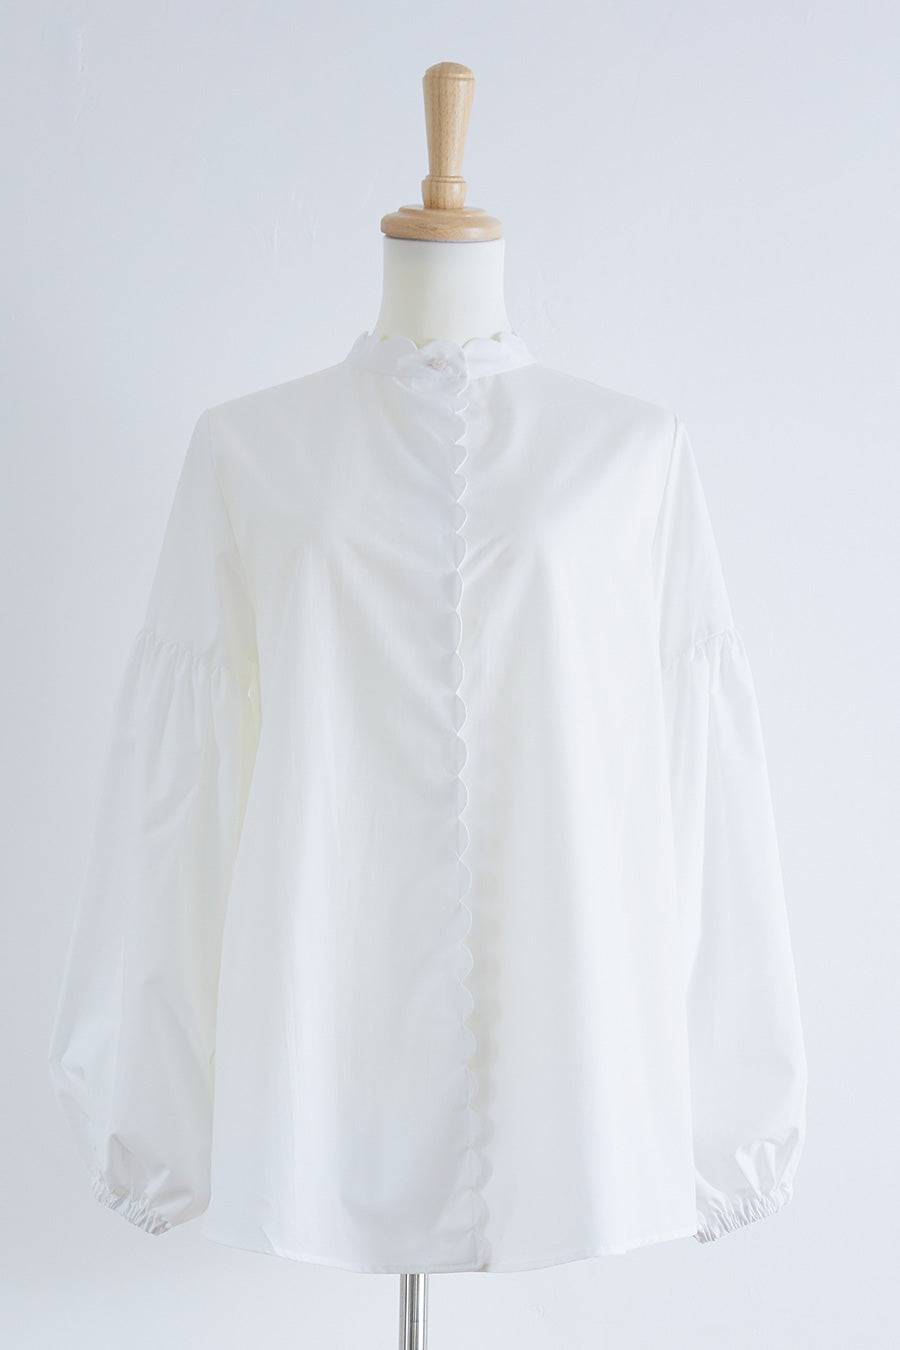 ensuite tiny scallop blouse off white